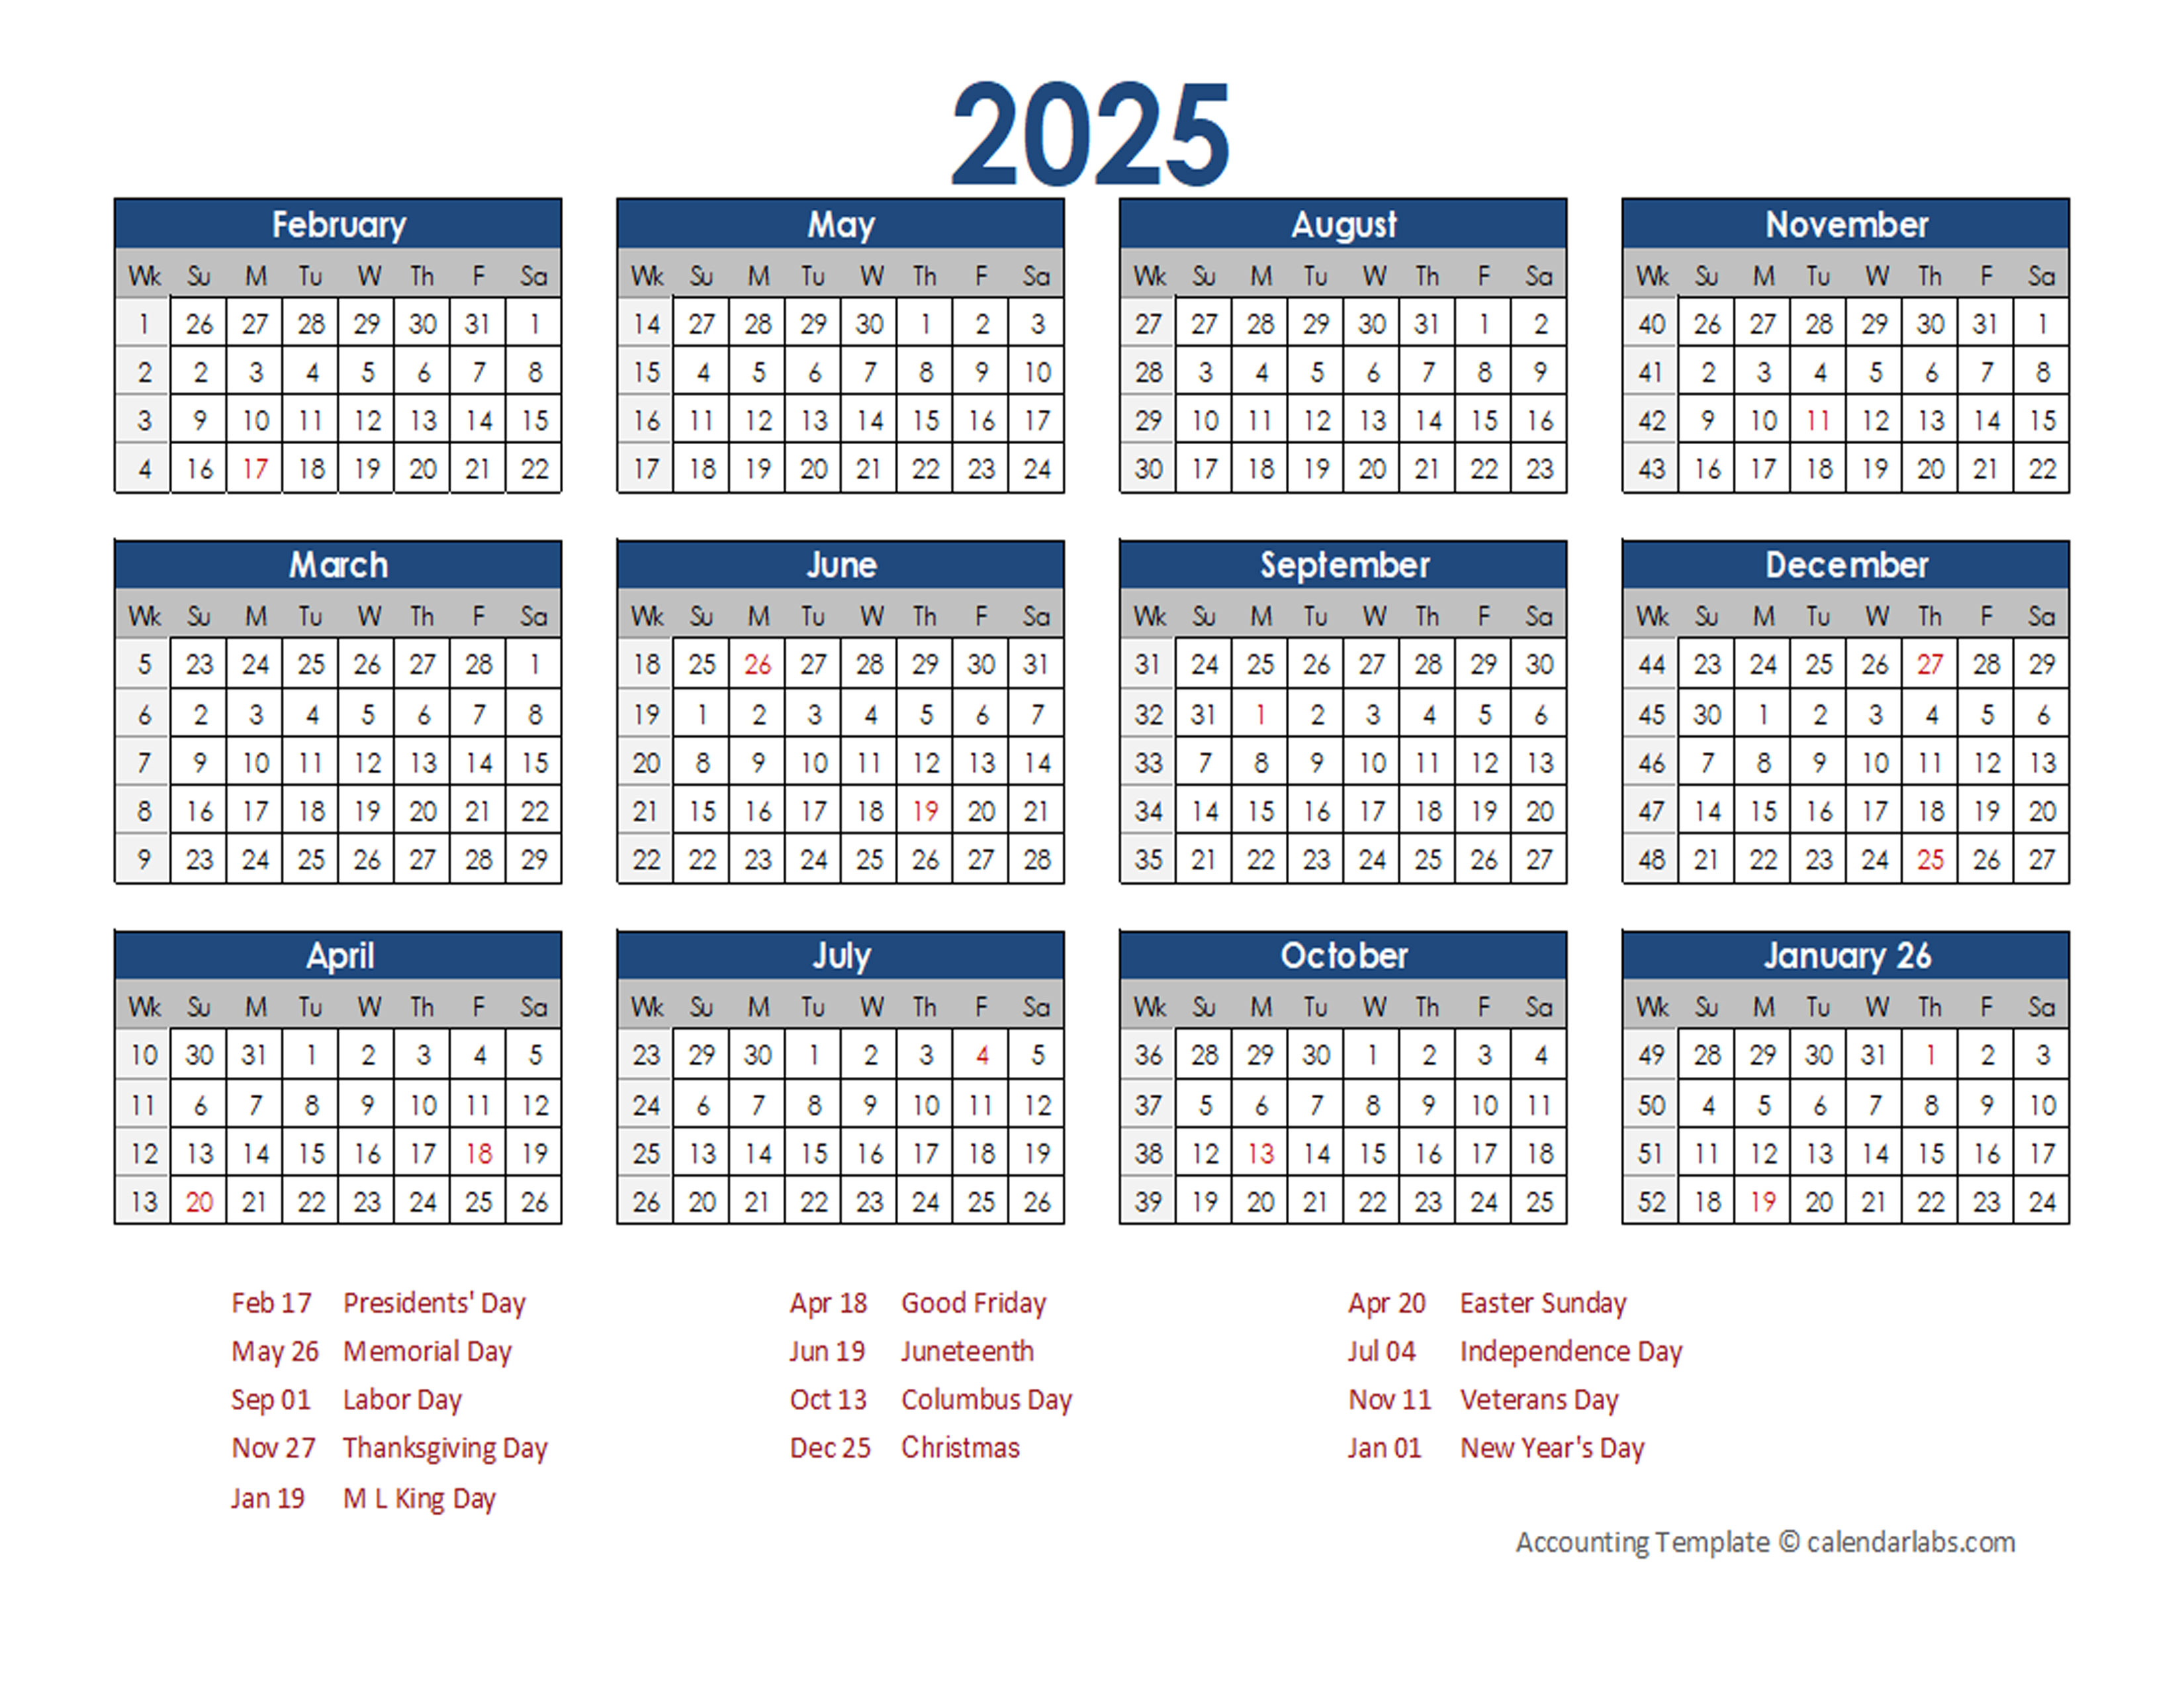 2025 Accounting Calendar 4-5-4 - Free Printable Templates